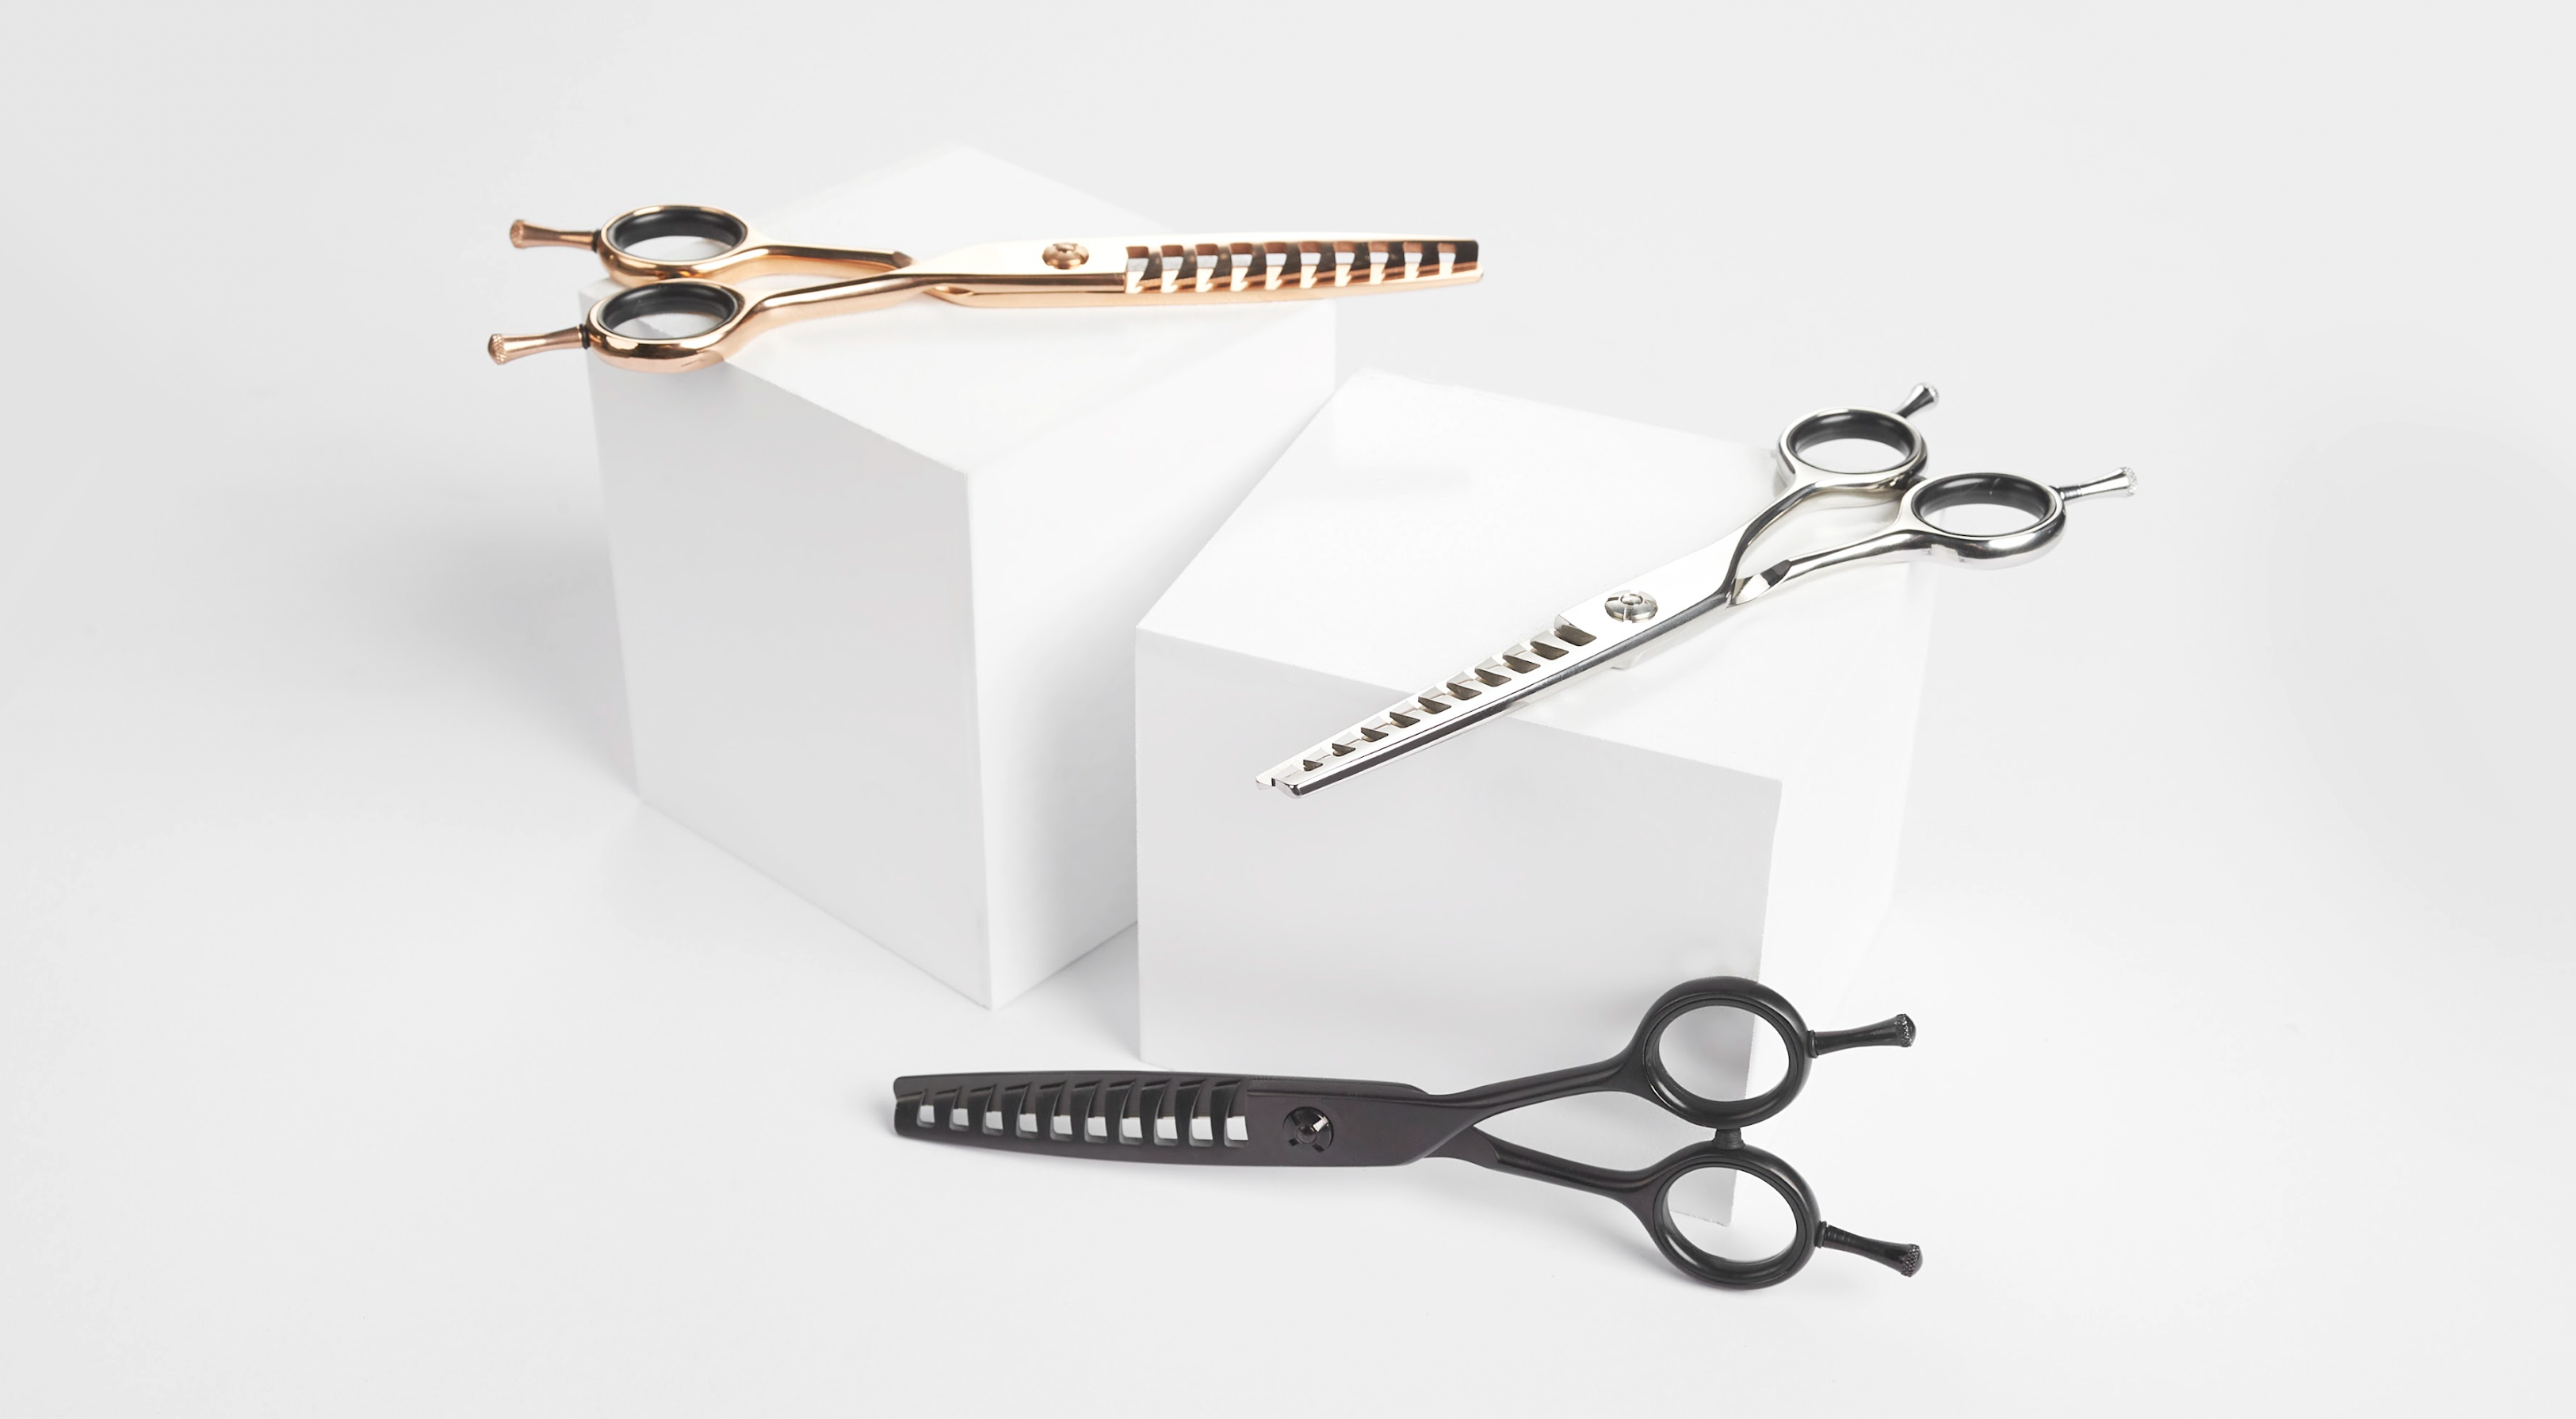 Home - little-scissors-salon